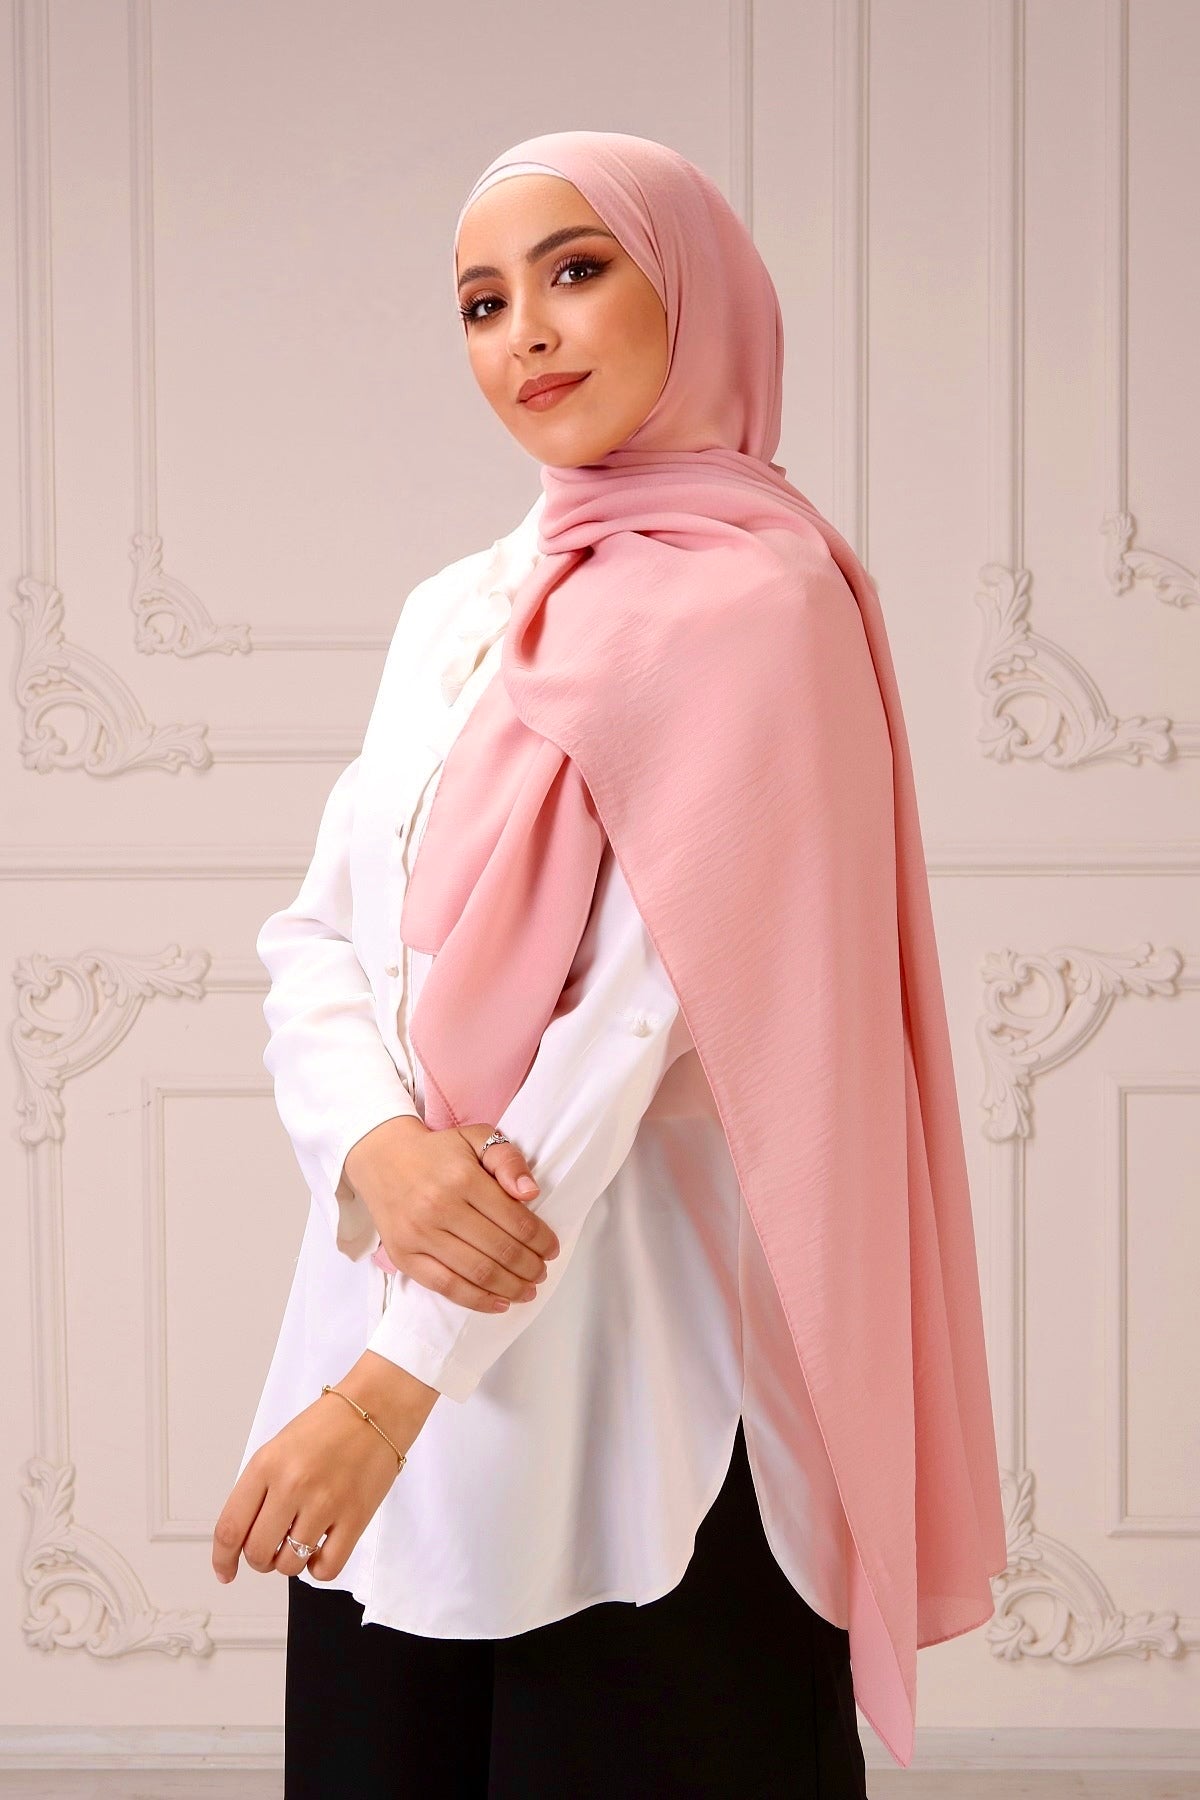 Hijab crinckle crepe Rosa - Hijab Paradise 